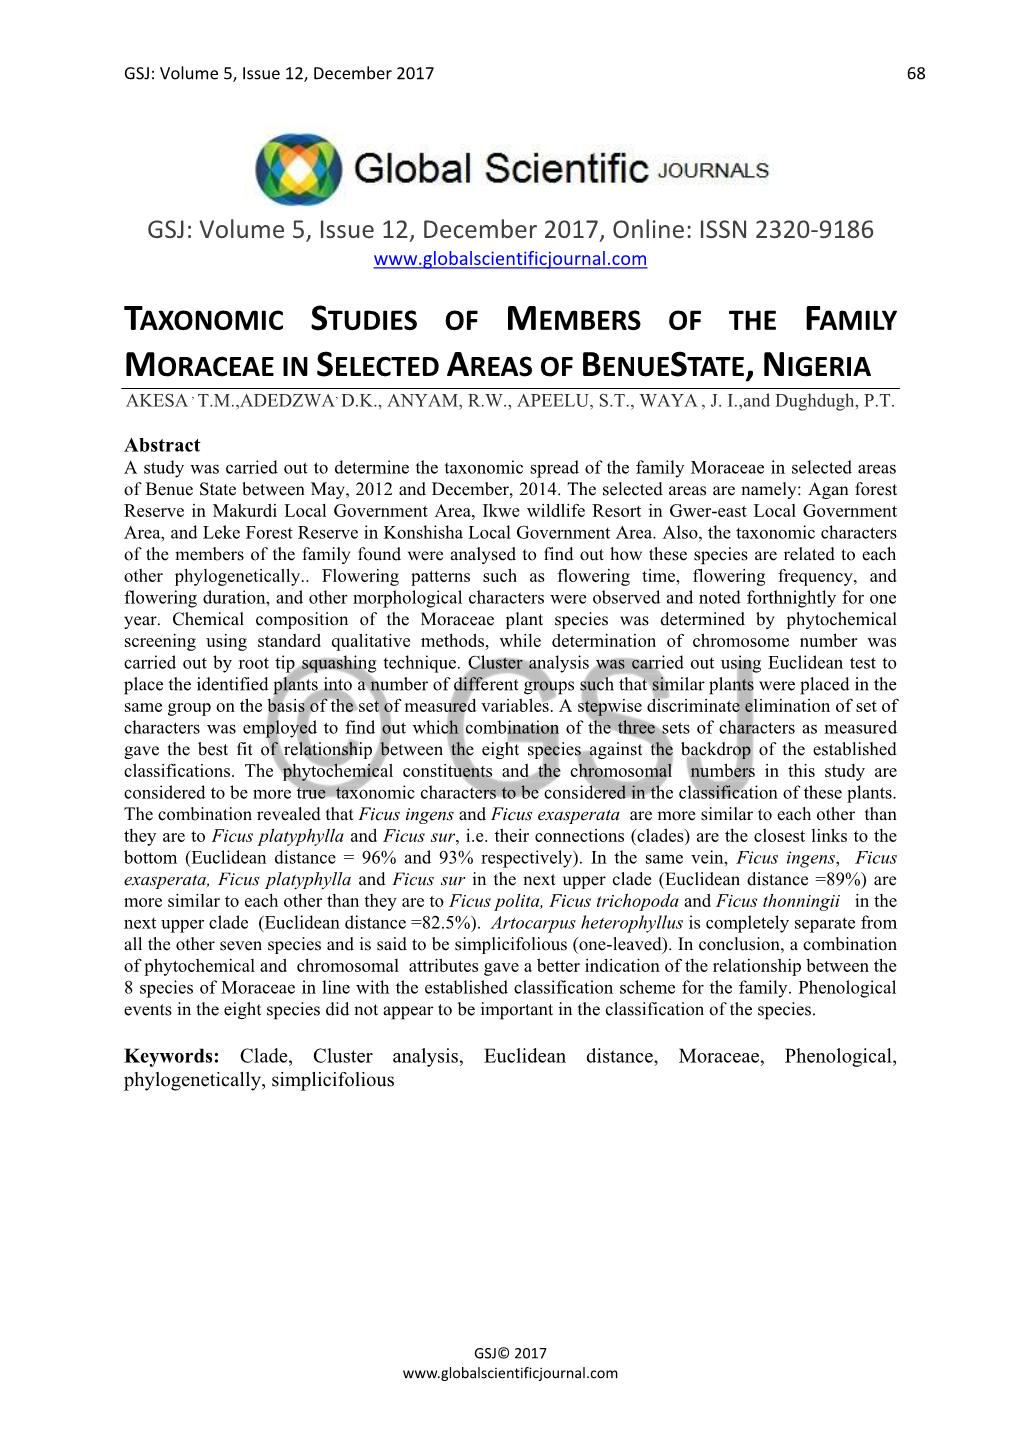 Taxonomic Studies of Members of the Family Moraceae in Selected Areas of Benuestate, Nigeria Akesa , T.M.,Adedzwa, D.K., Anyam, R.W., Apeelu, S.T., Waya , J